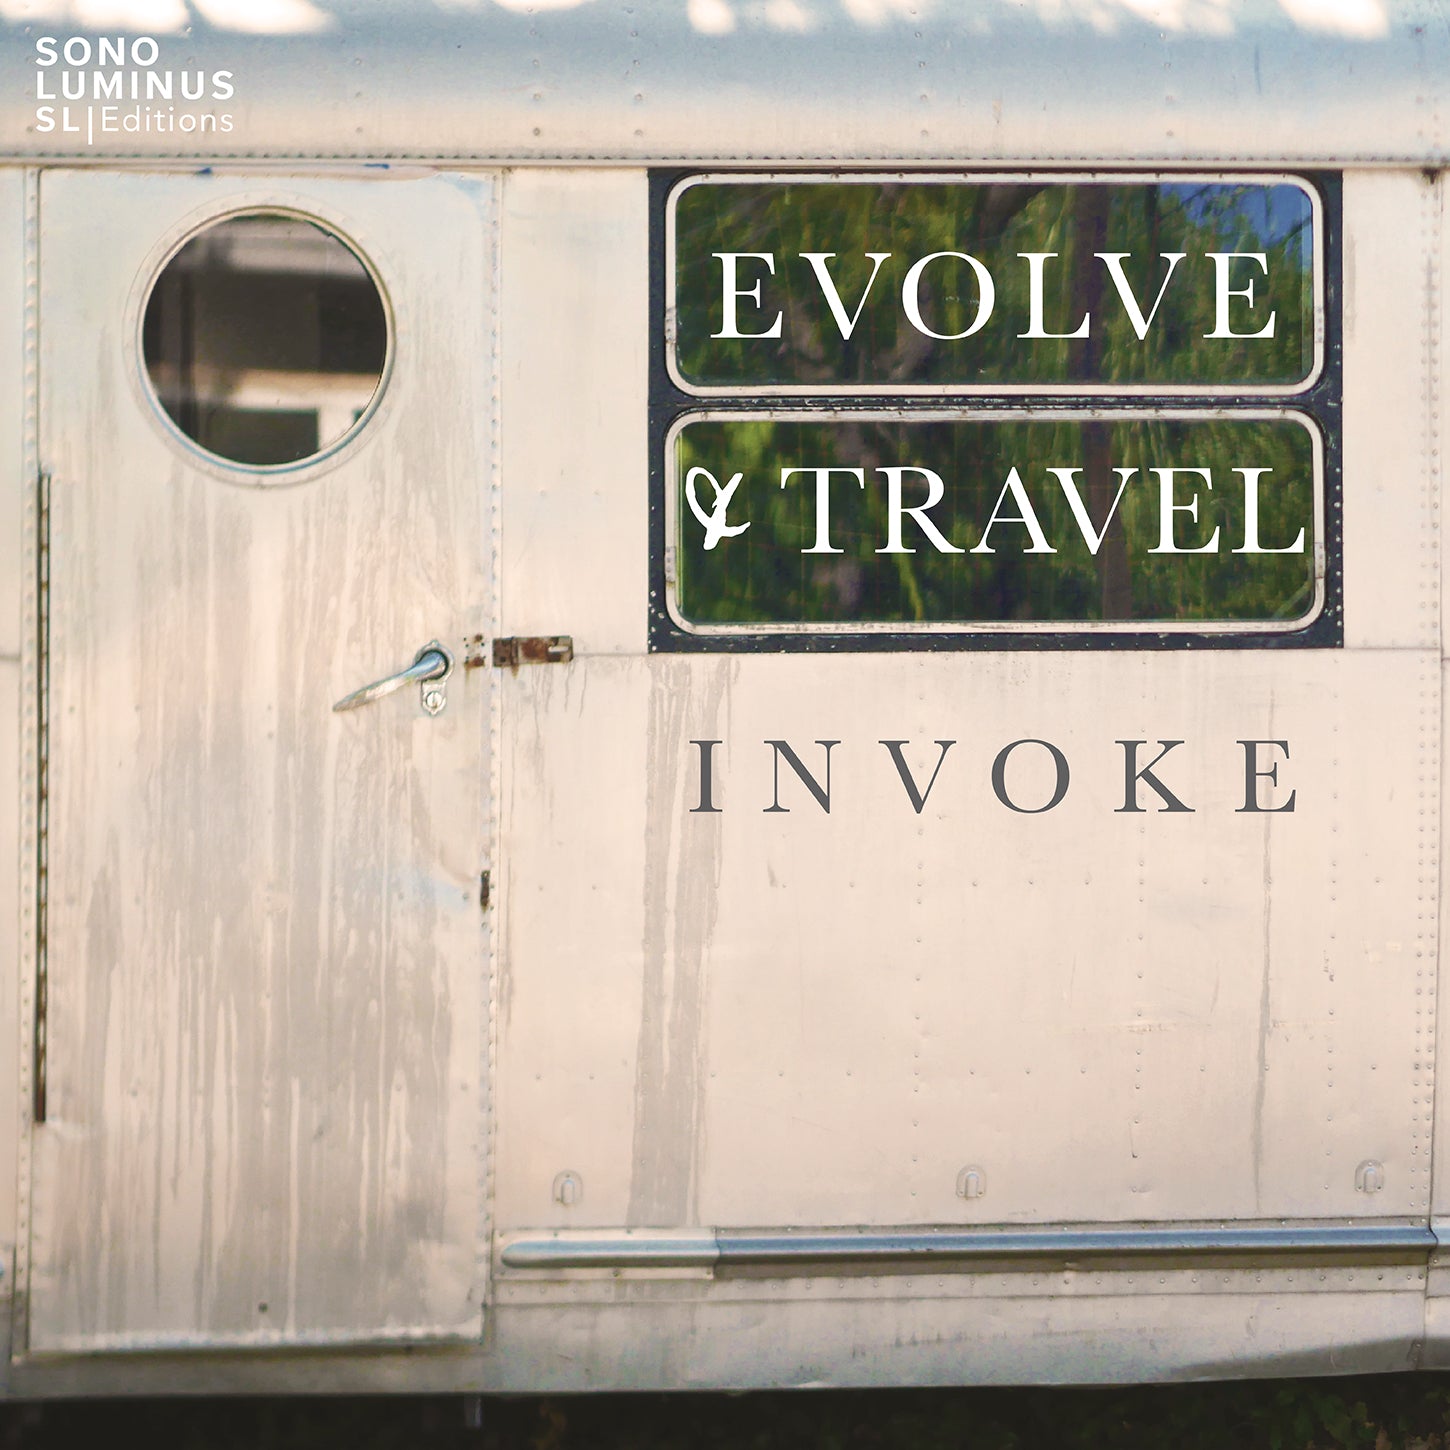 Evolve & Travel / Invoke